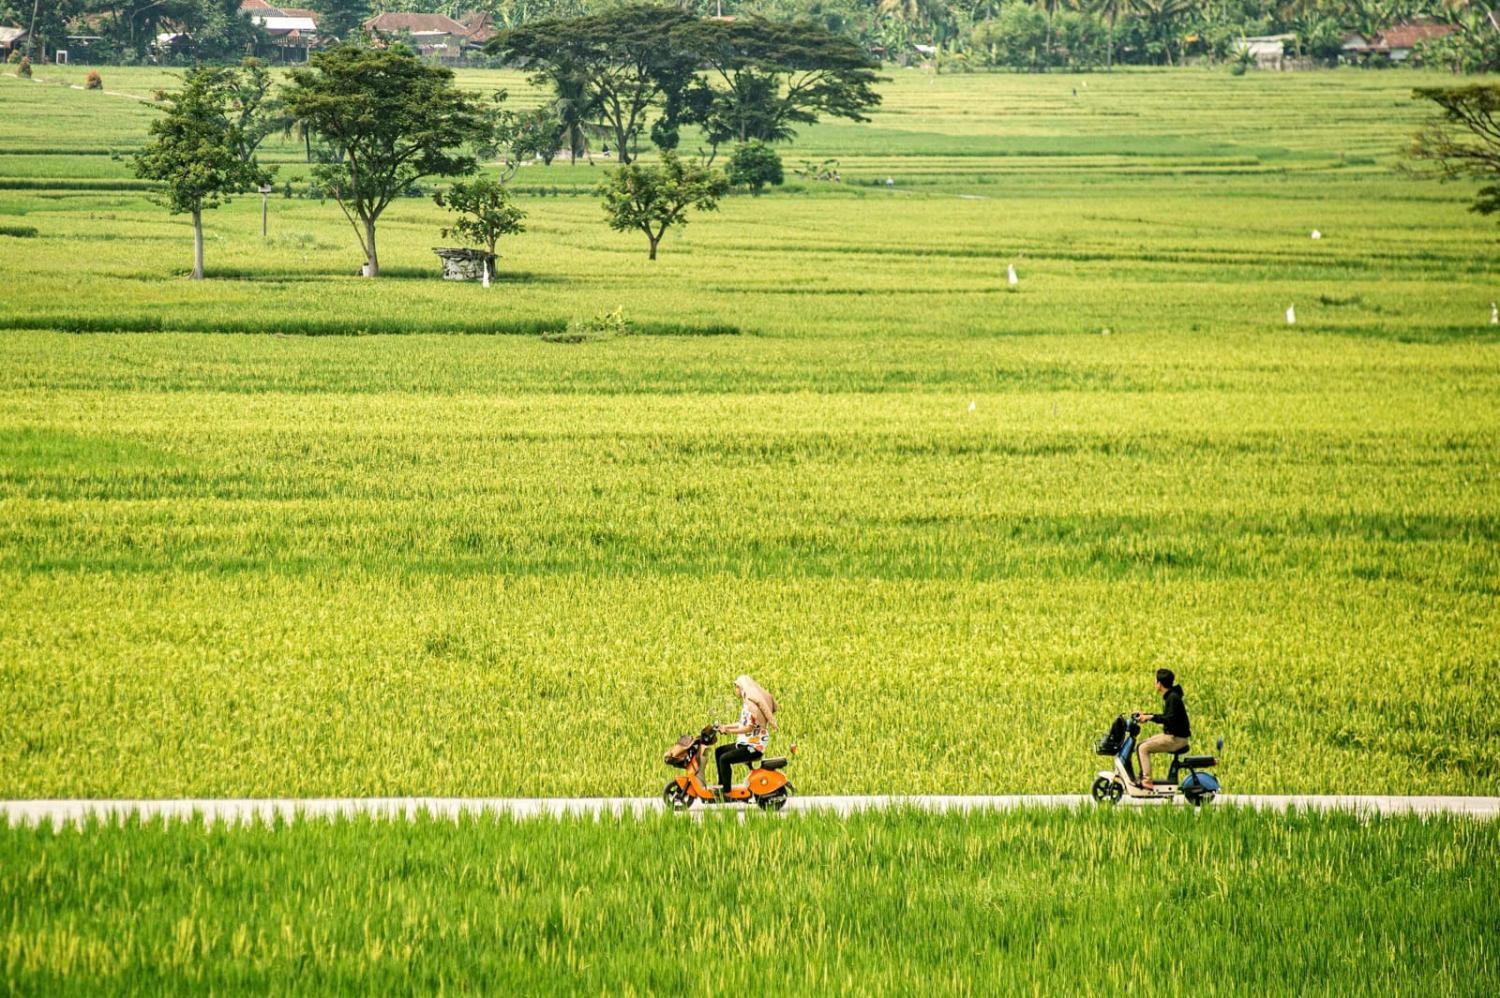 Leisure time with electric motorbikes at Pronosutan paddy field in Kulon Progo regency, Yogyakarta, Indonesia, 26 May (Agung Supriyanto/Xinhua via Getty Images)